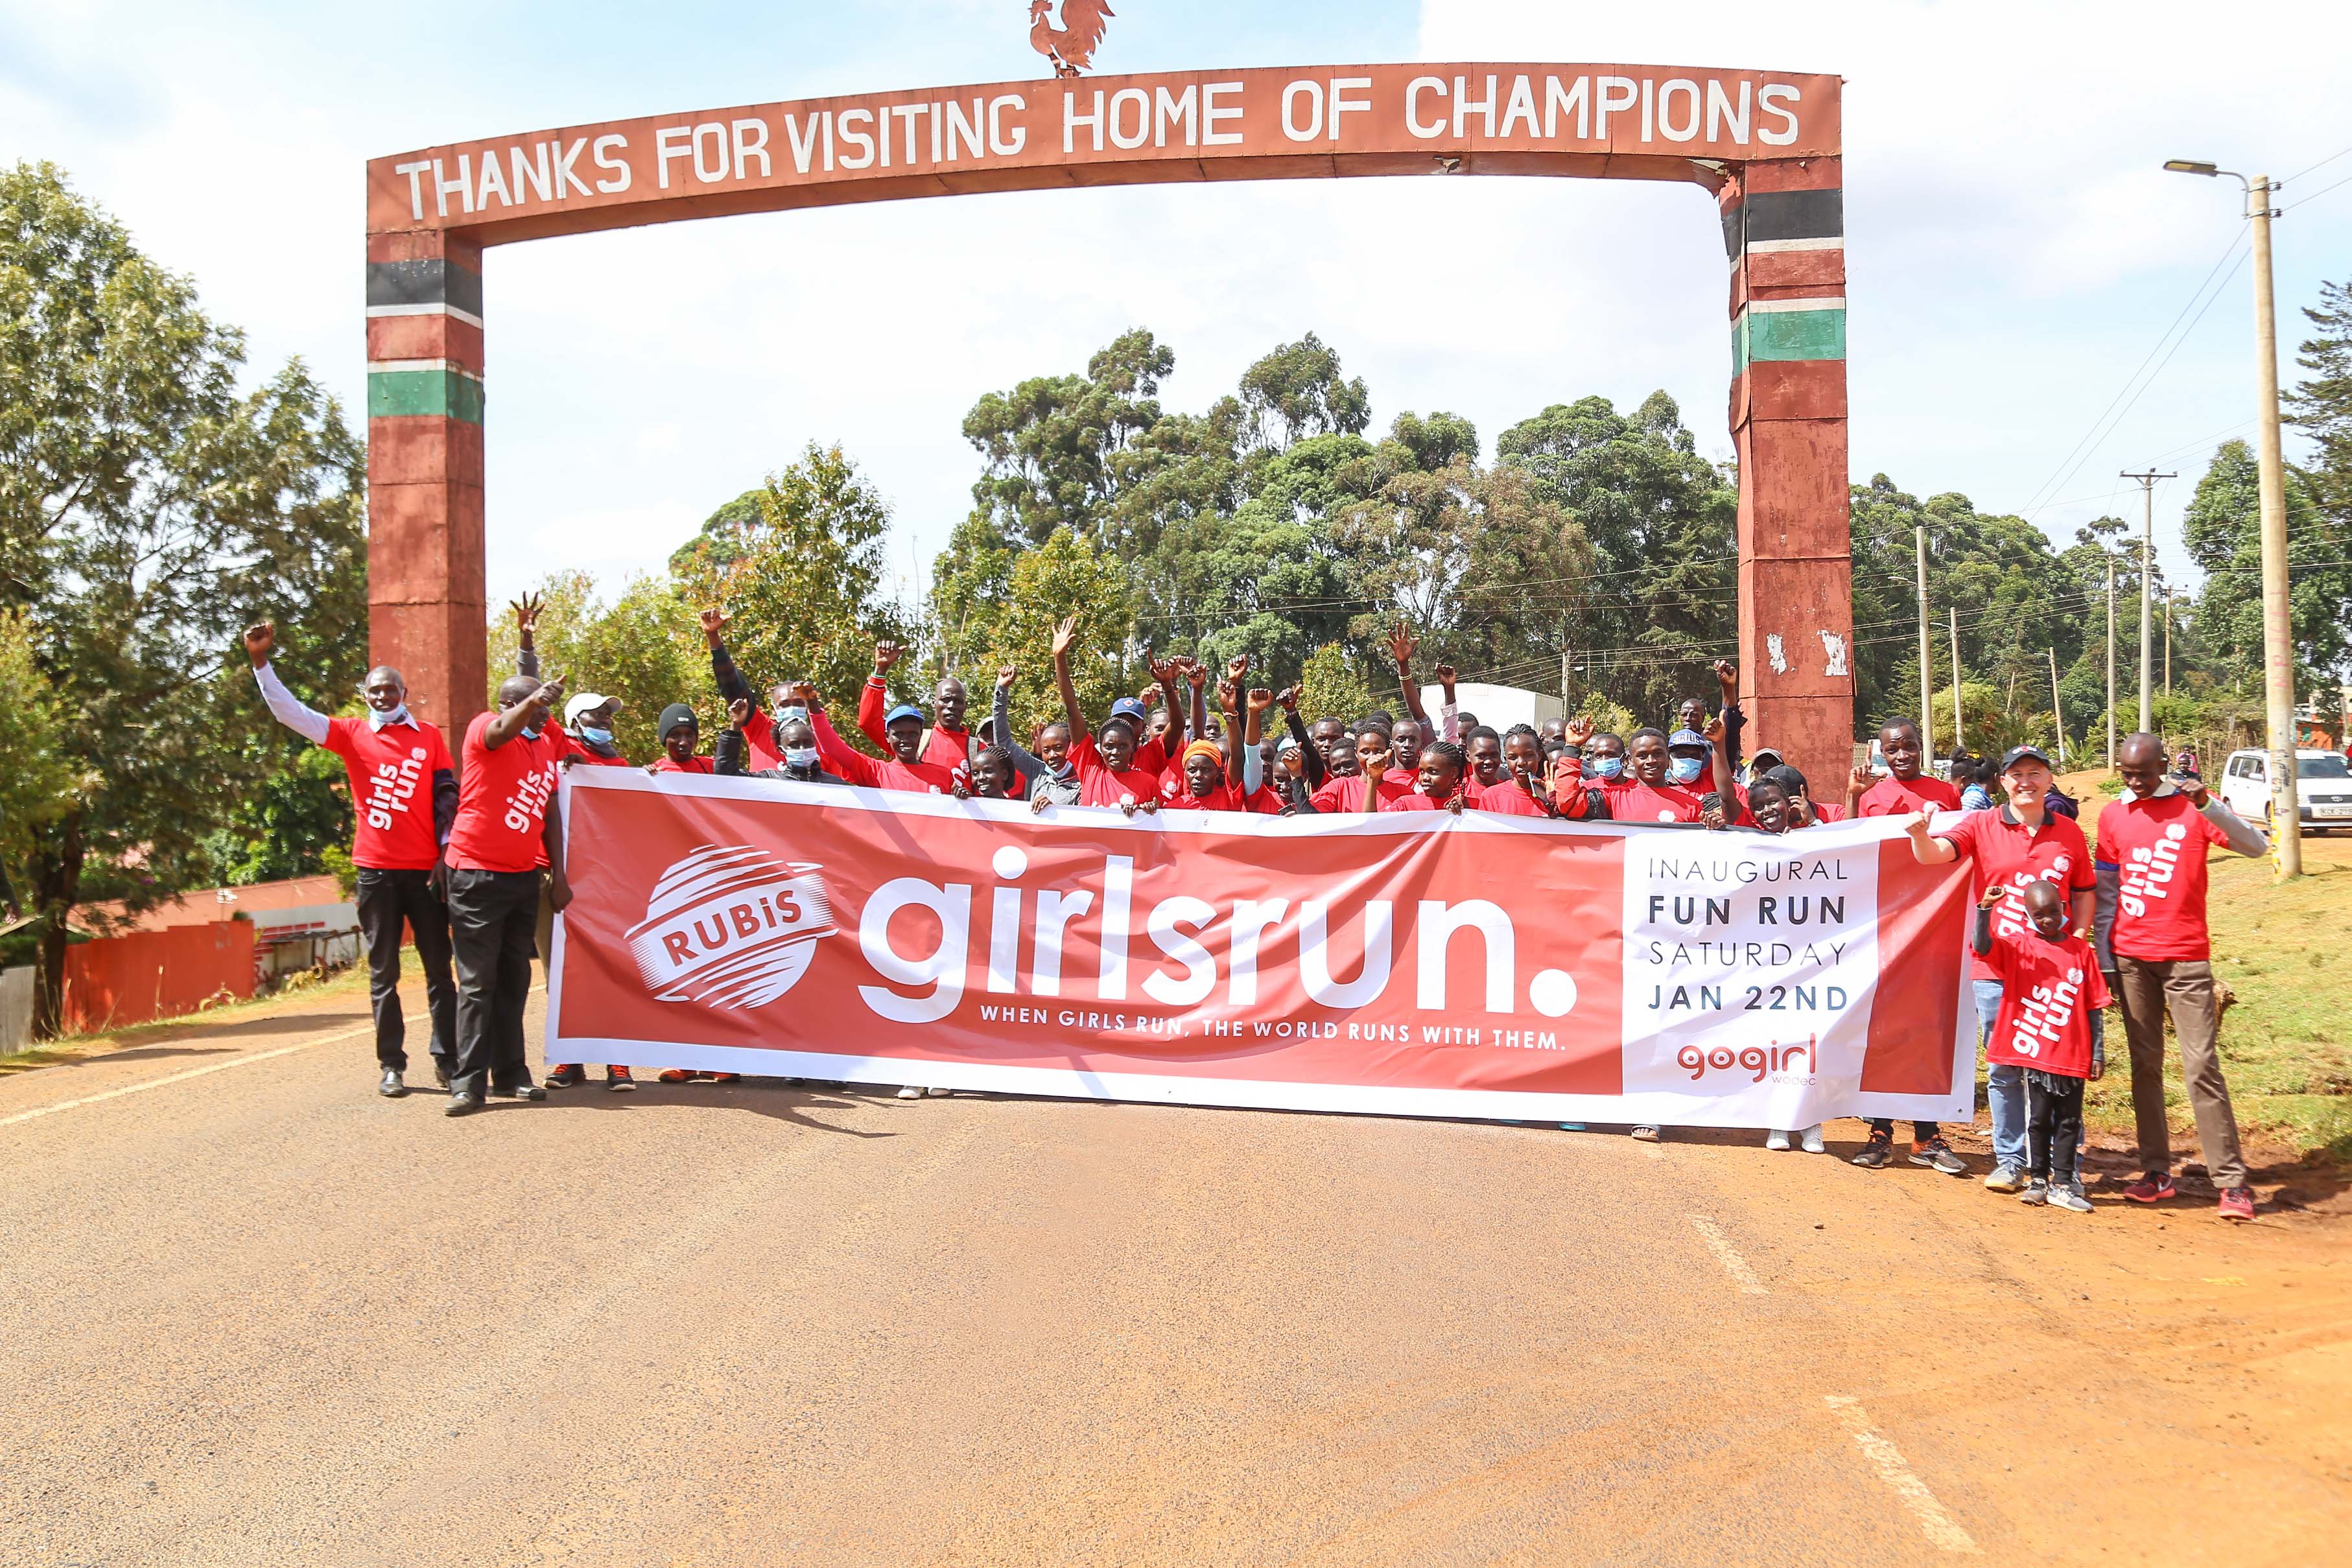 Girls at Eldoret stadium holding the "GirlsRun Marathon" banner with Rubis Kenya staff. This marathon is sponsored by Rubis Kenya